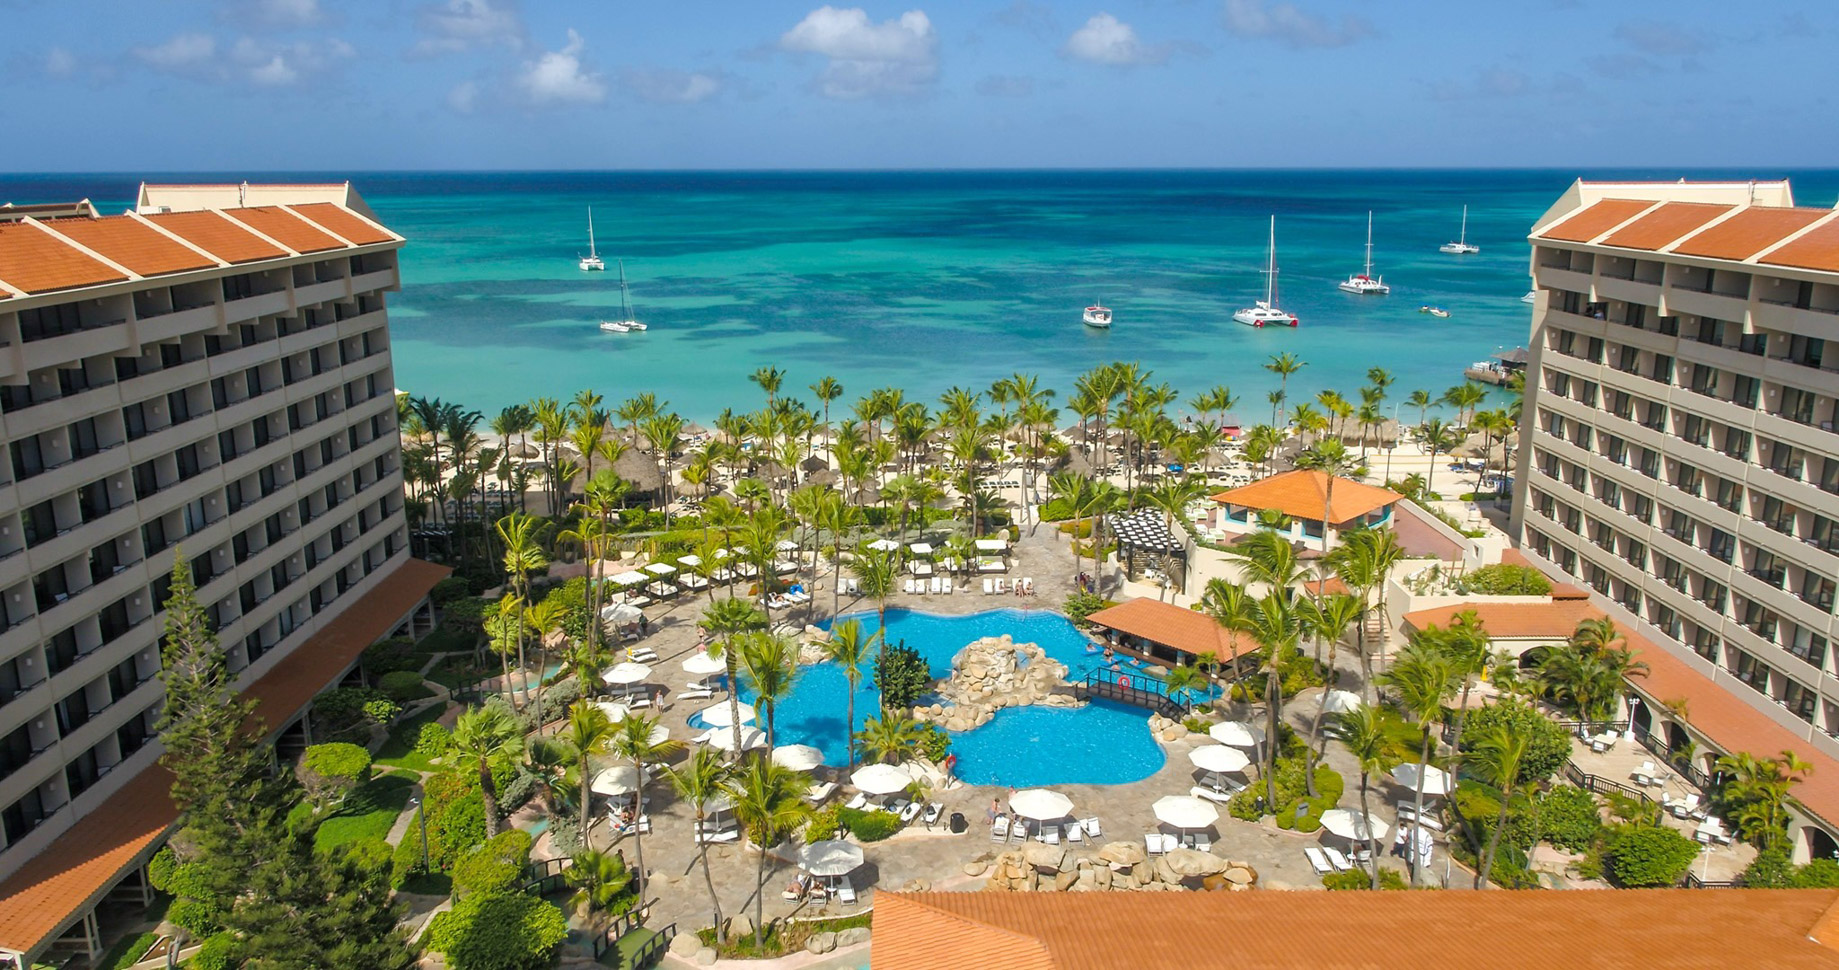 Barceló Aruba Palm Beach Resort – Noord, Aruba – Pool Aerial View